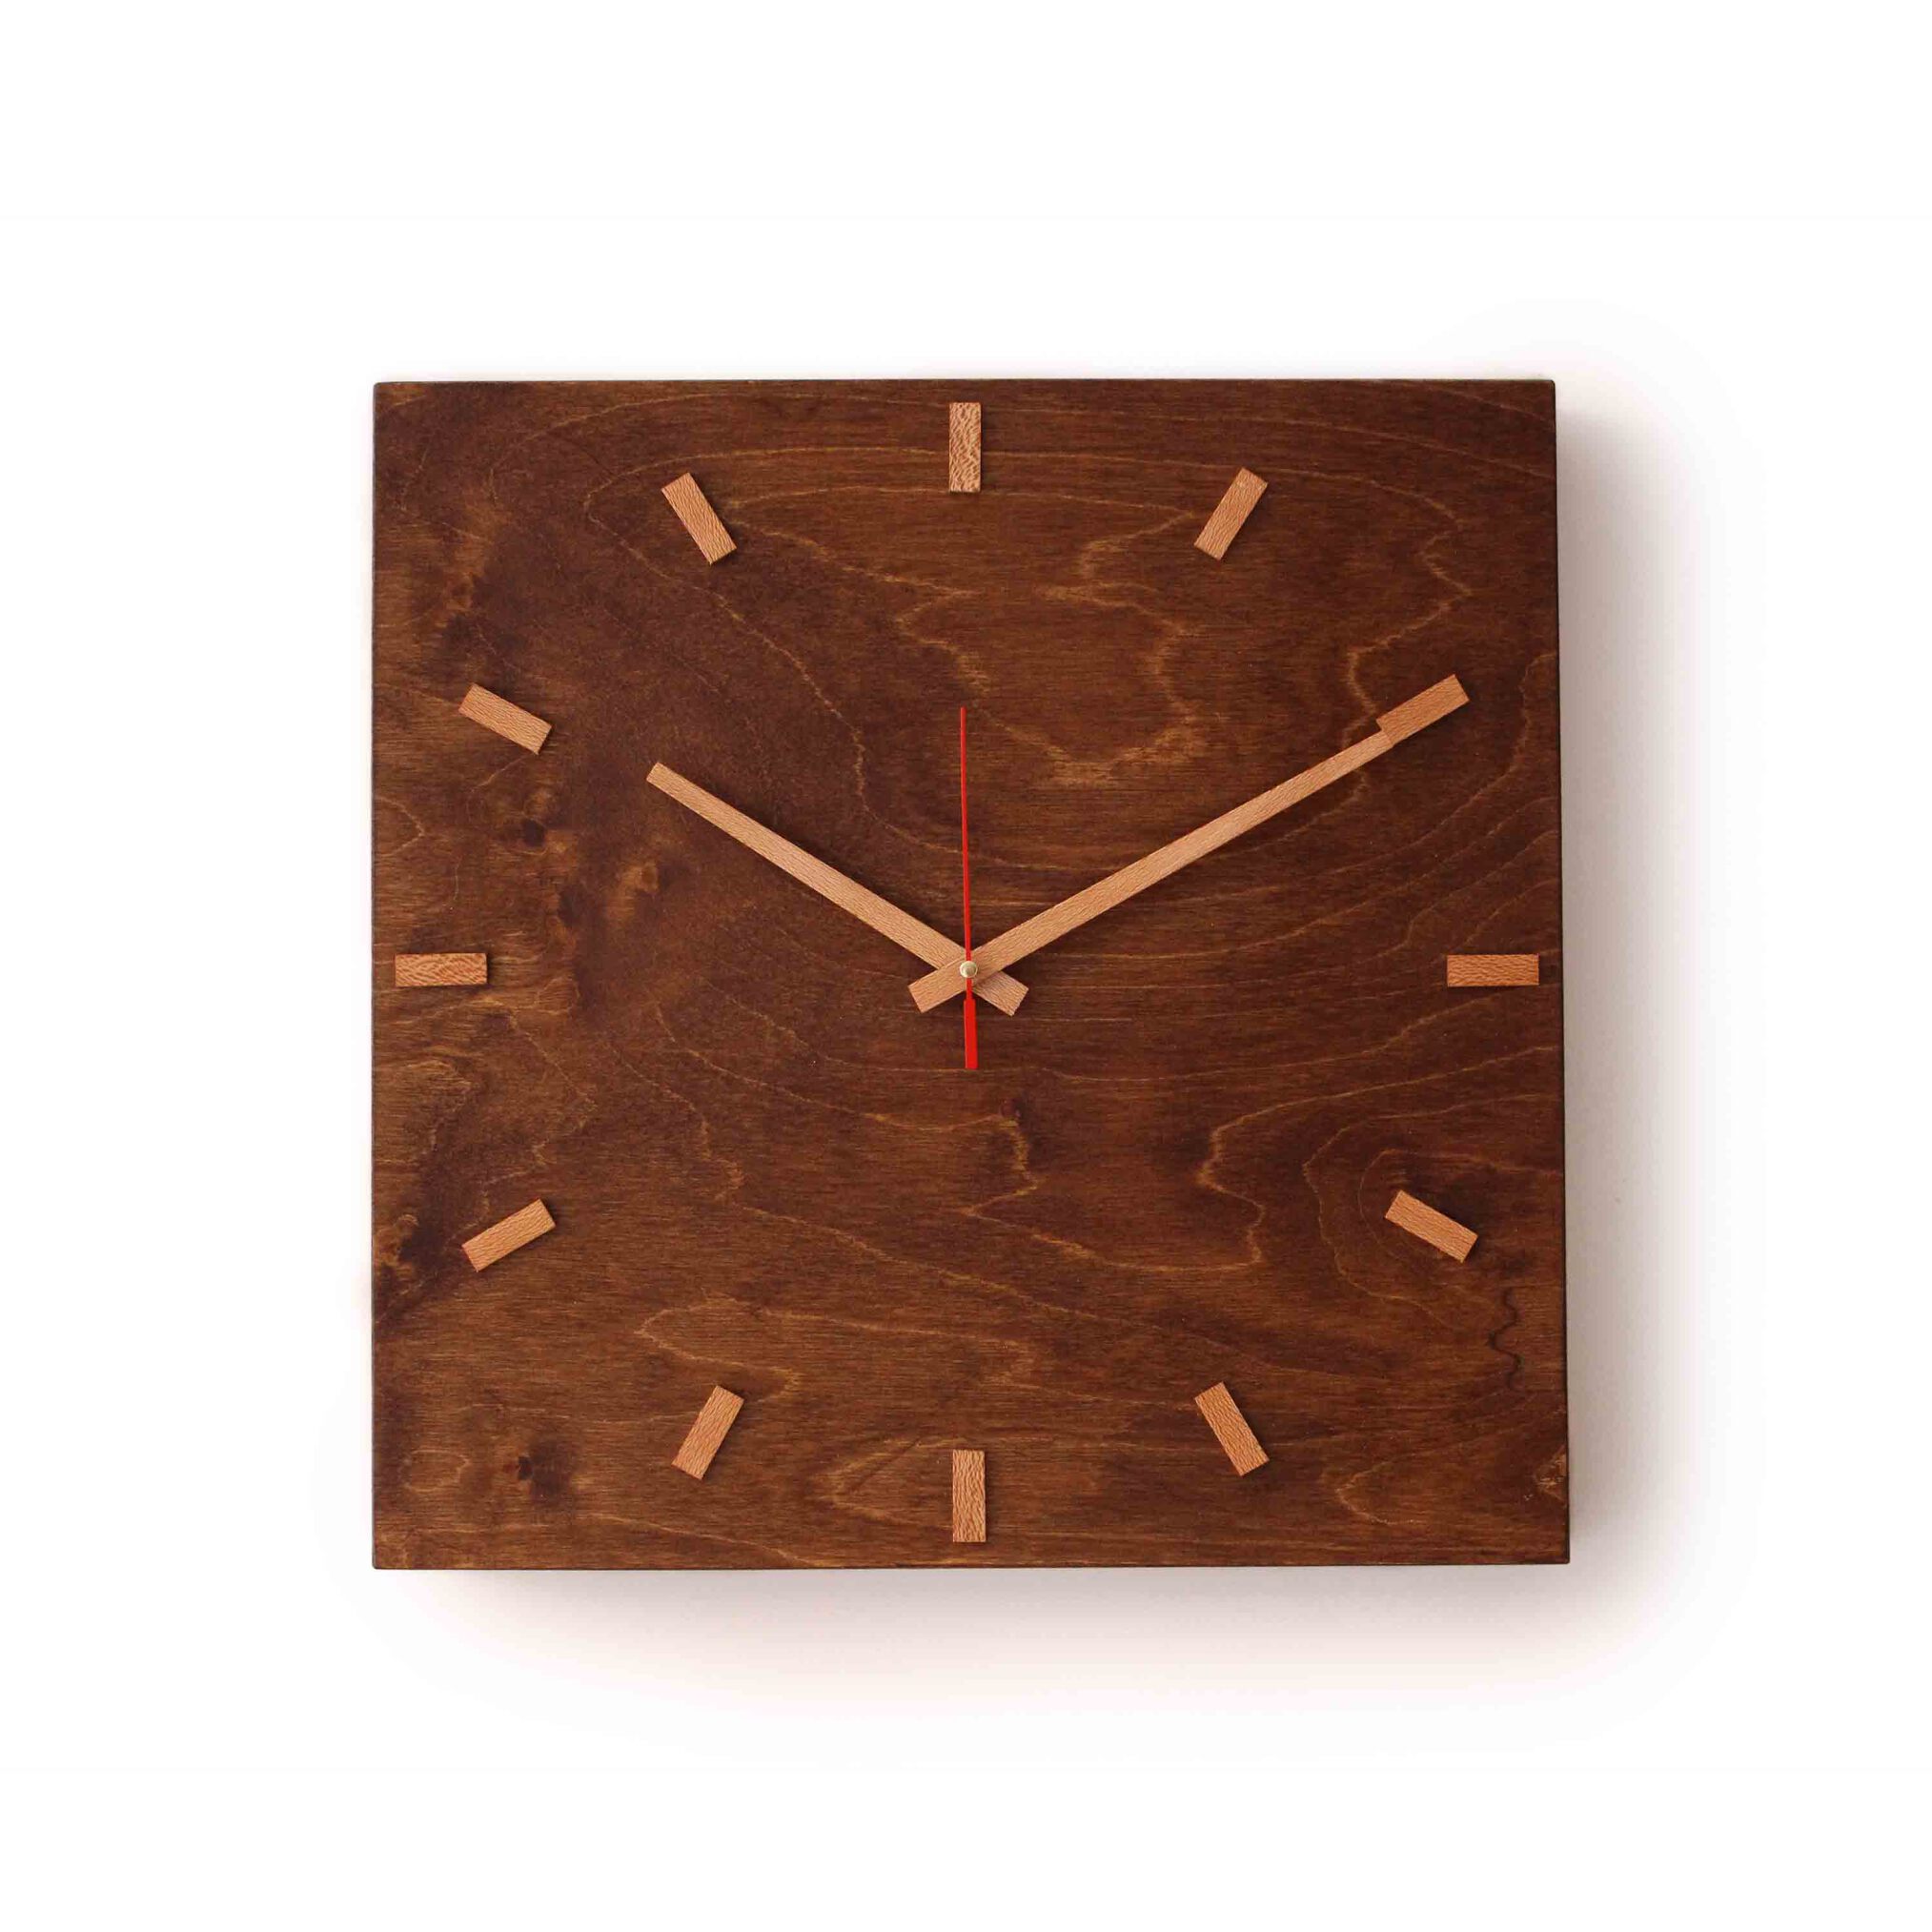  ساعت دیواری چوبی، ساعت کادویی 